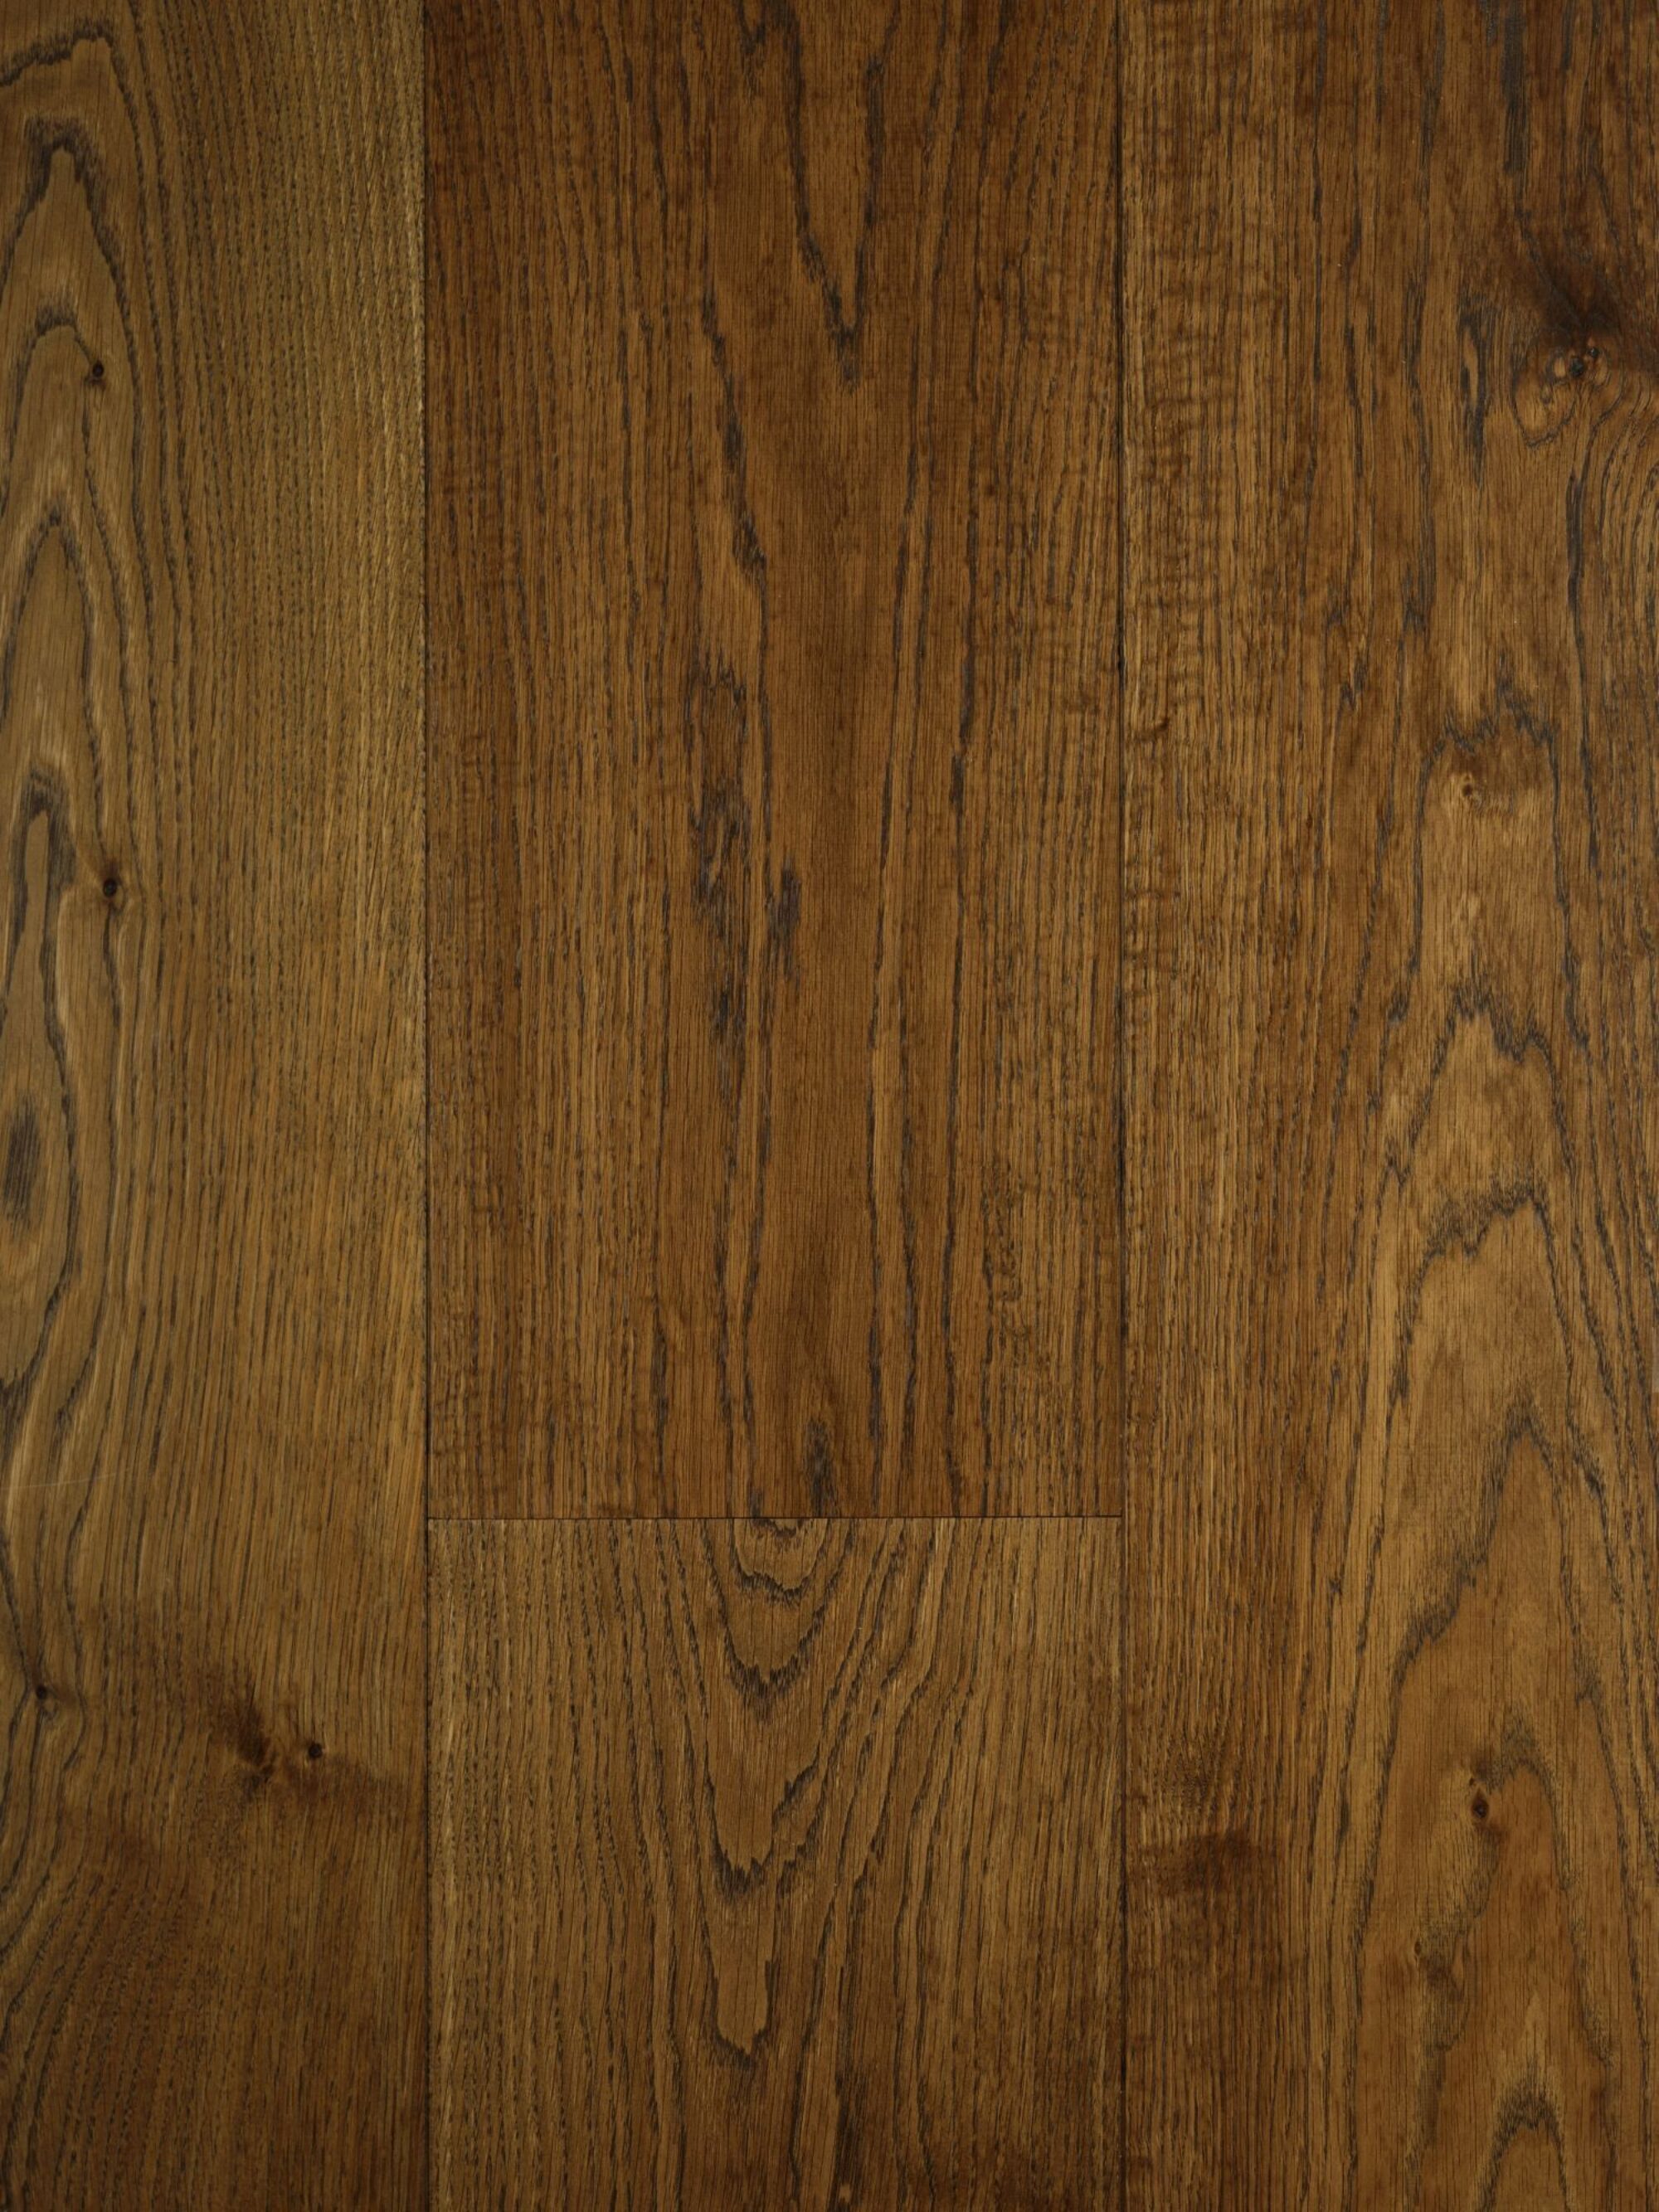 Rich brown oak flooring landmark derrymore